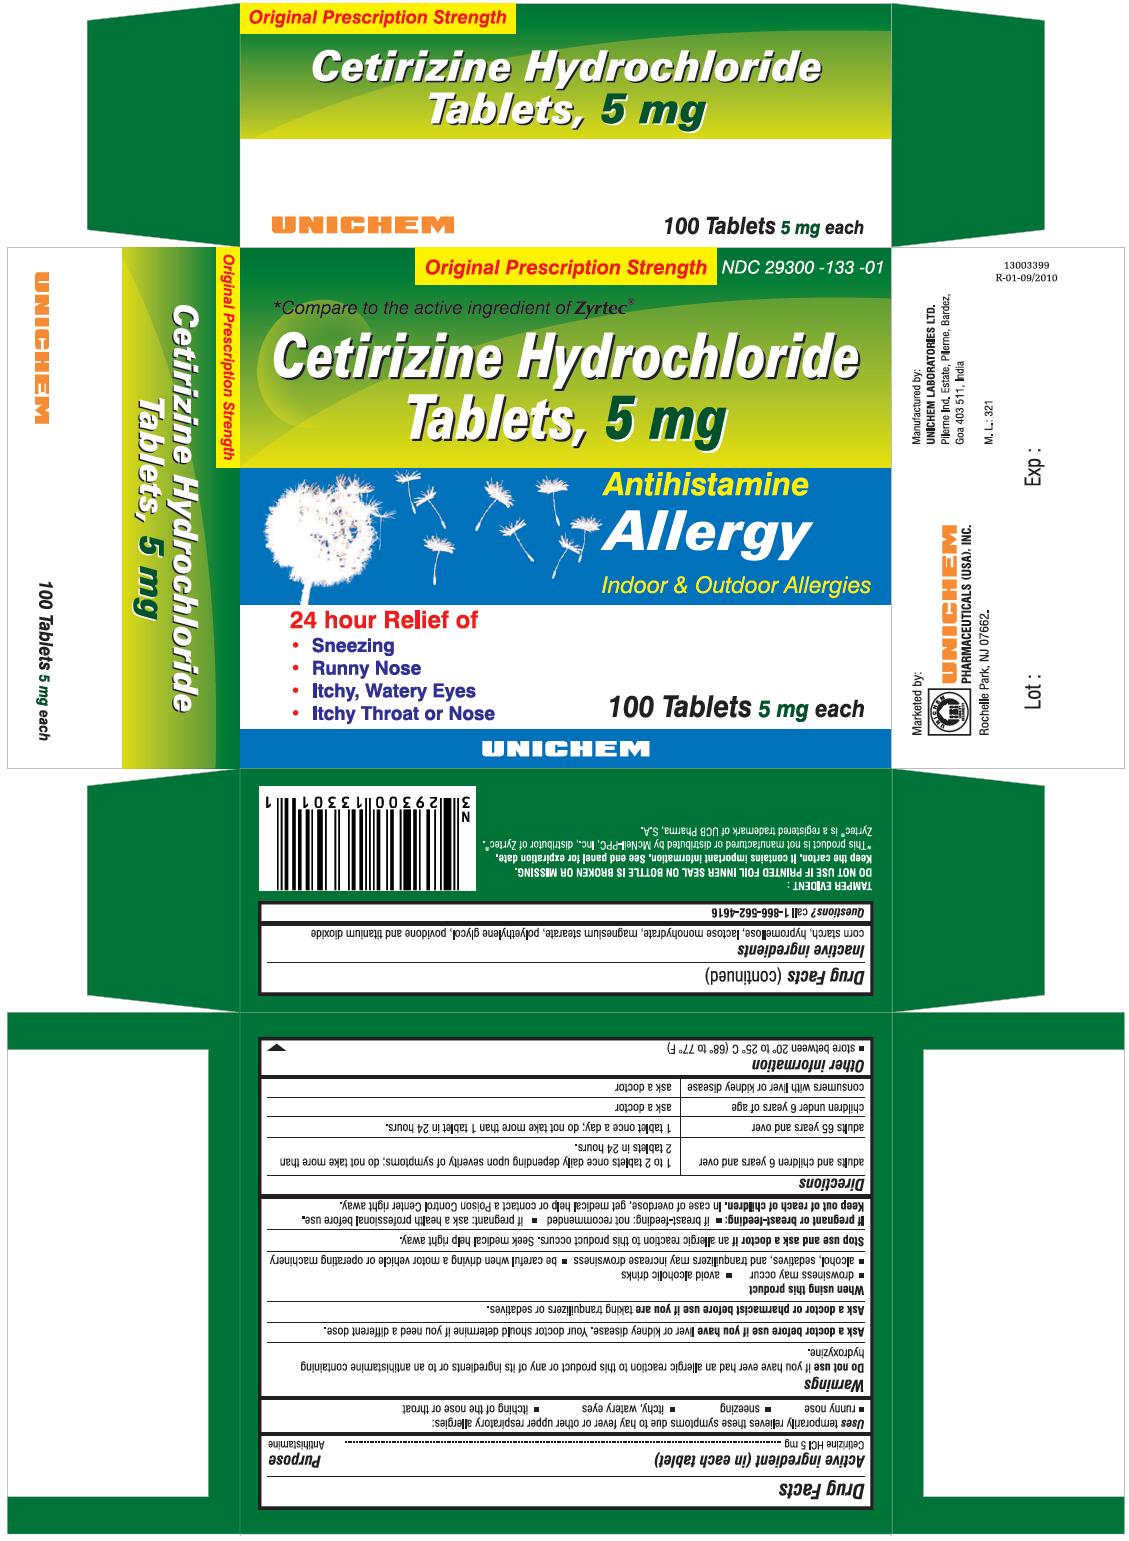 Cetirizine Hydrochloride Tablets 5 mg - Allergy